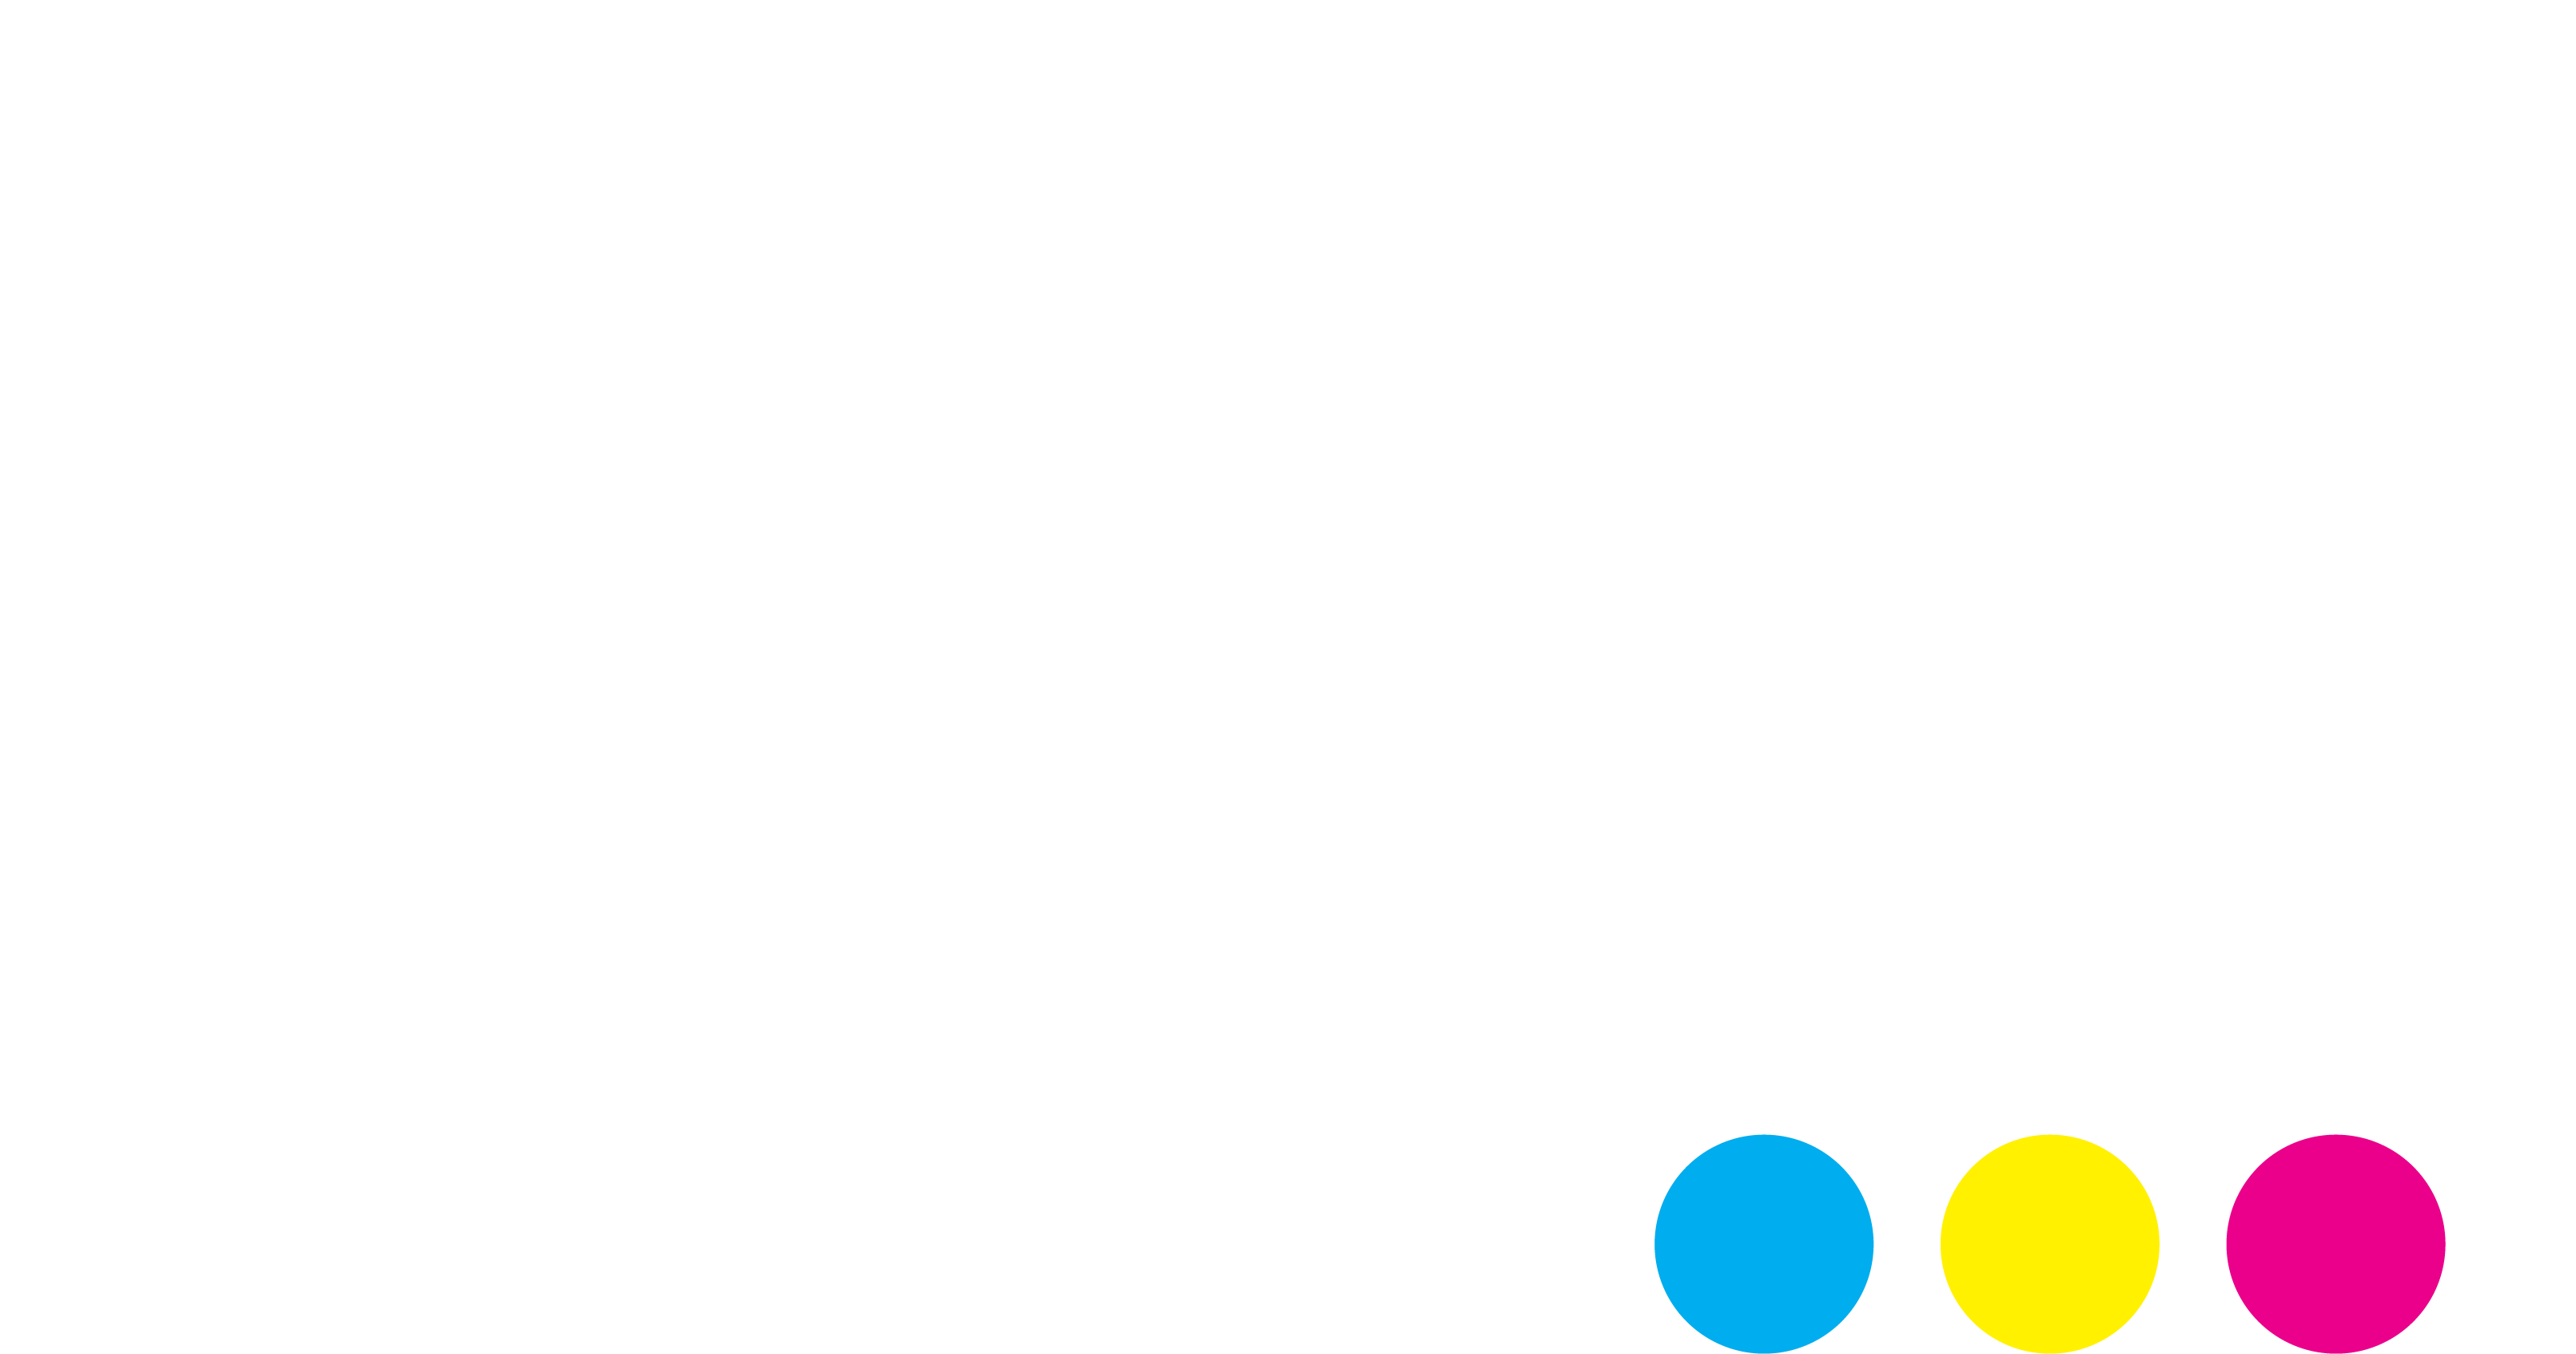 icatch-logo-white-1.png